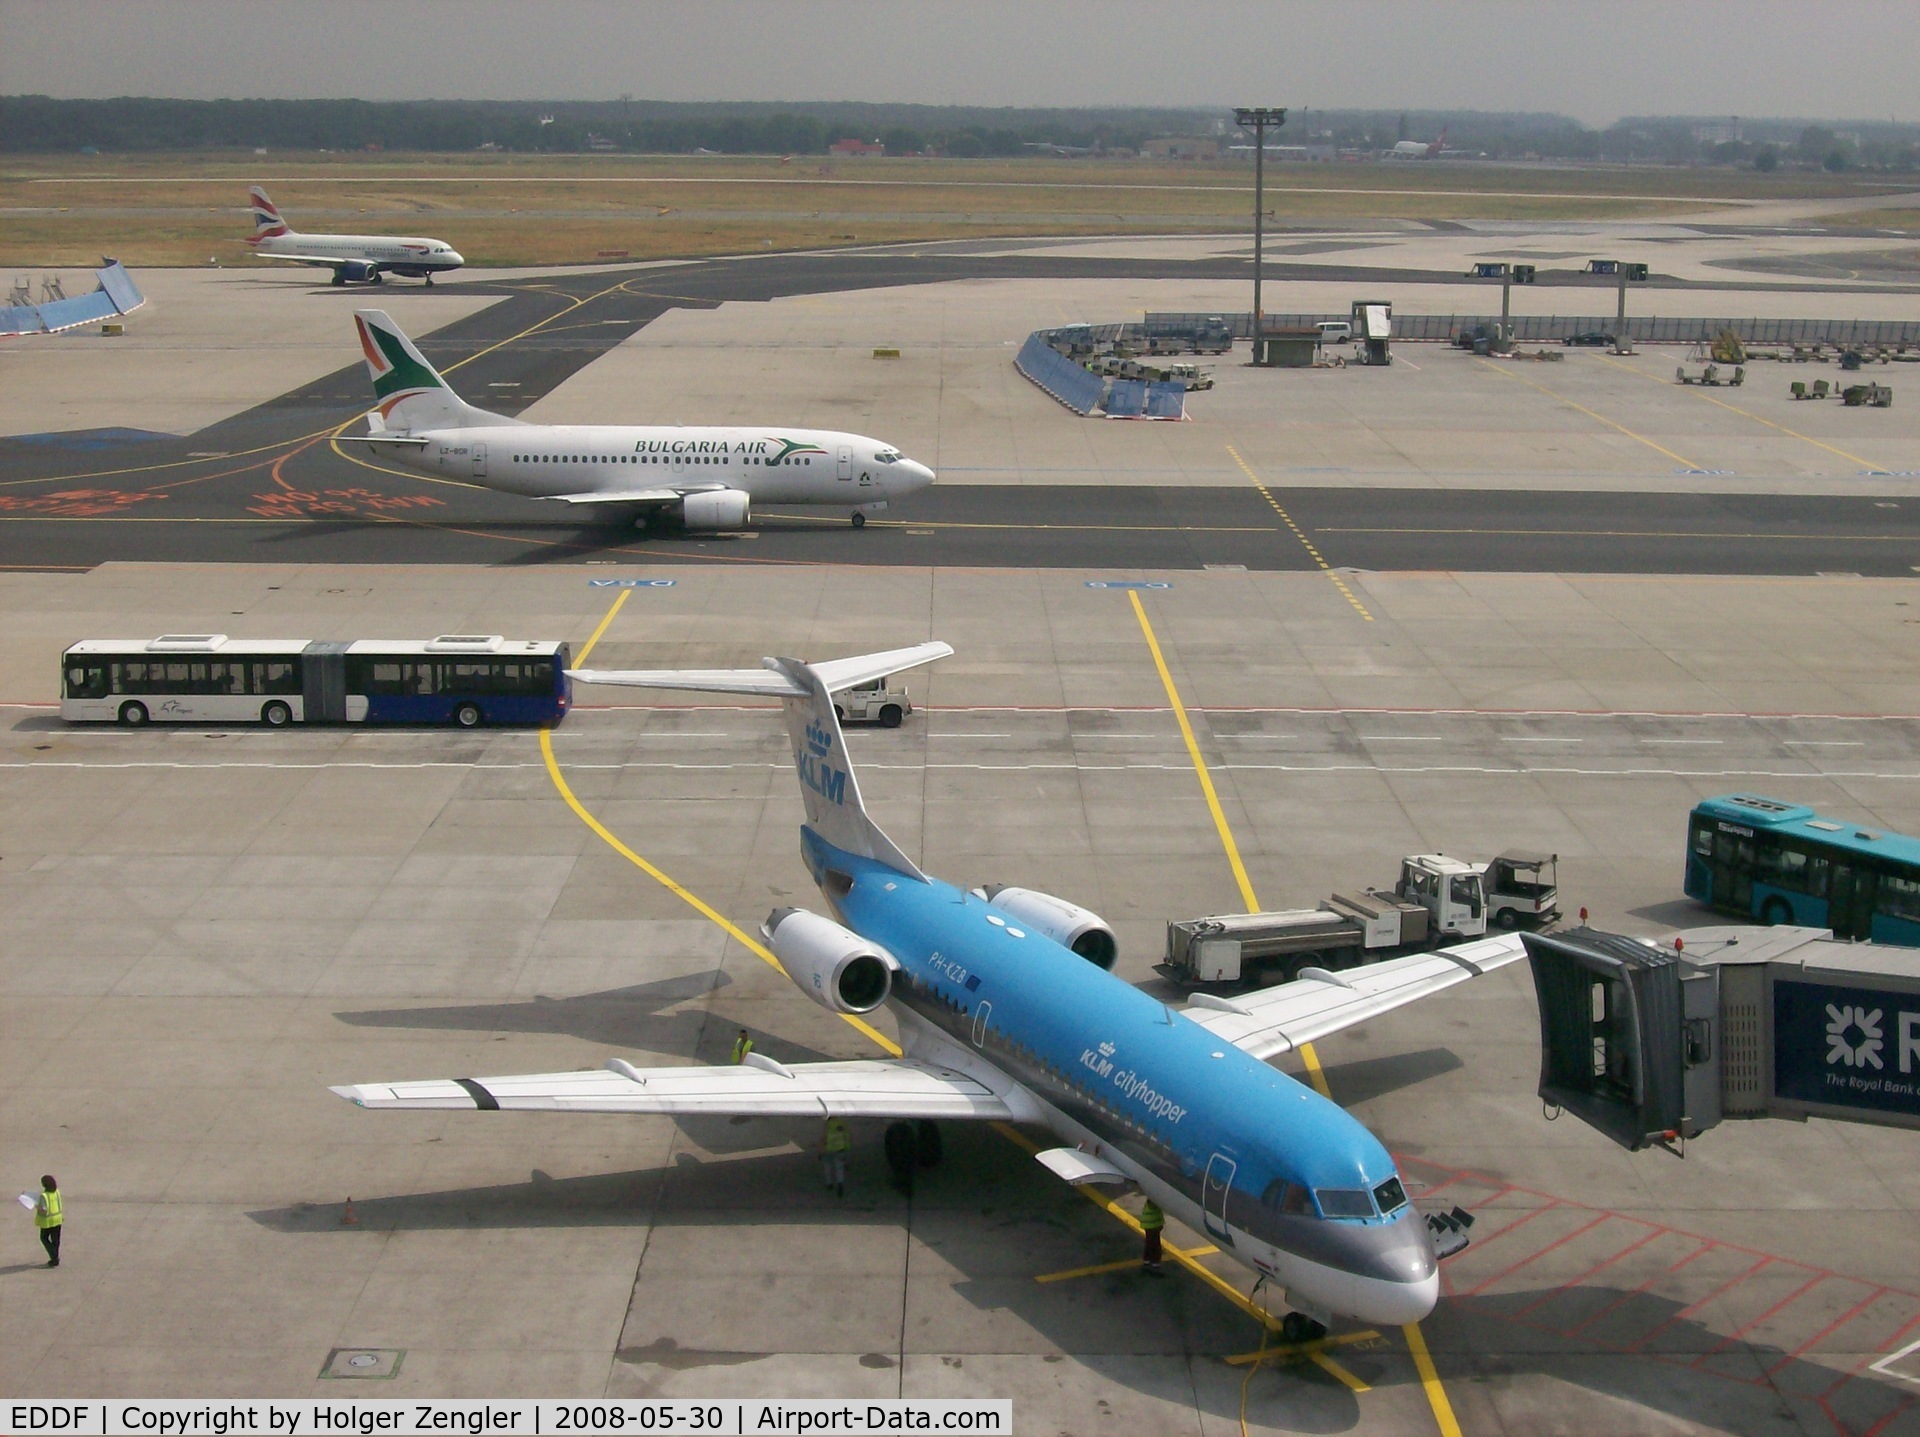 Frankfurt International Airport, Frankfurt am Main Germany (EDDF) - Planes and busses and a human being...